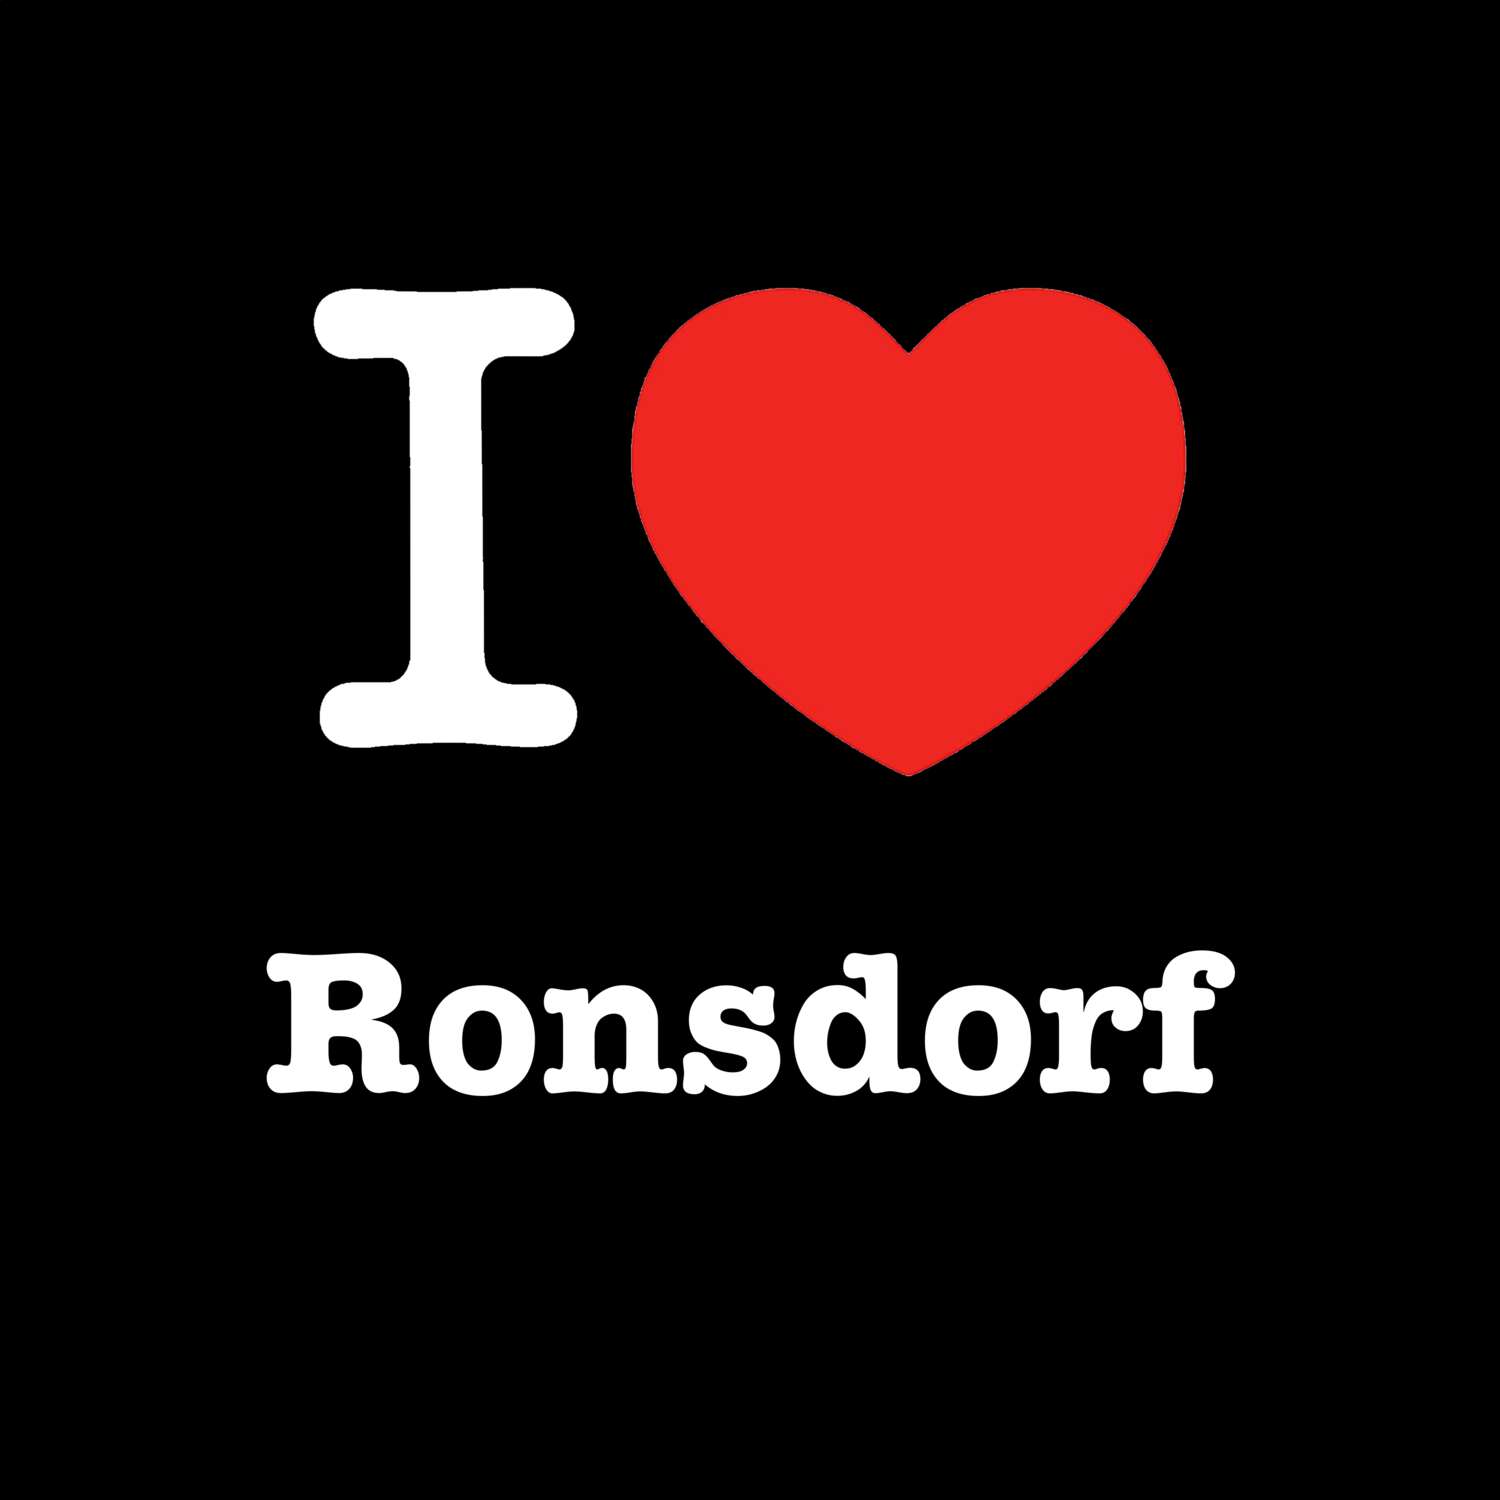 Ronsdorf T-Shirt »I love«